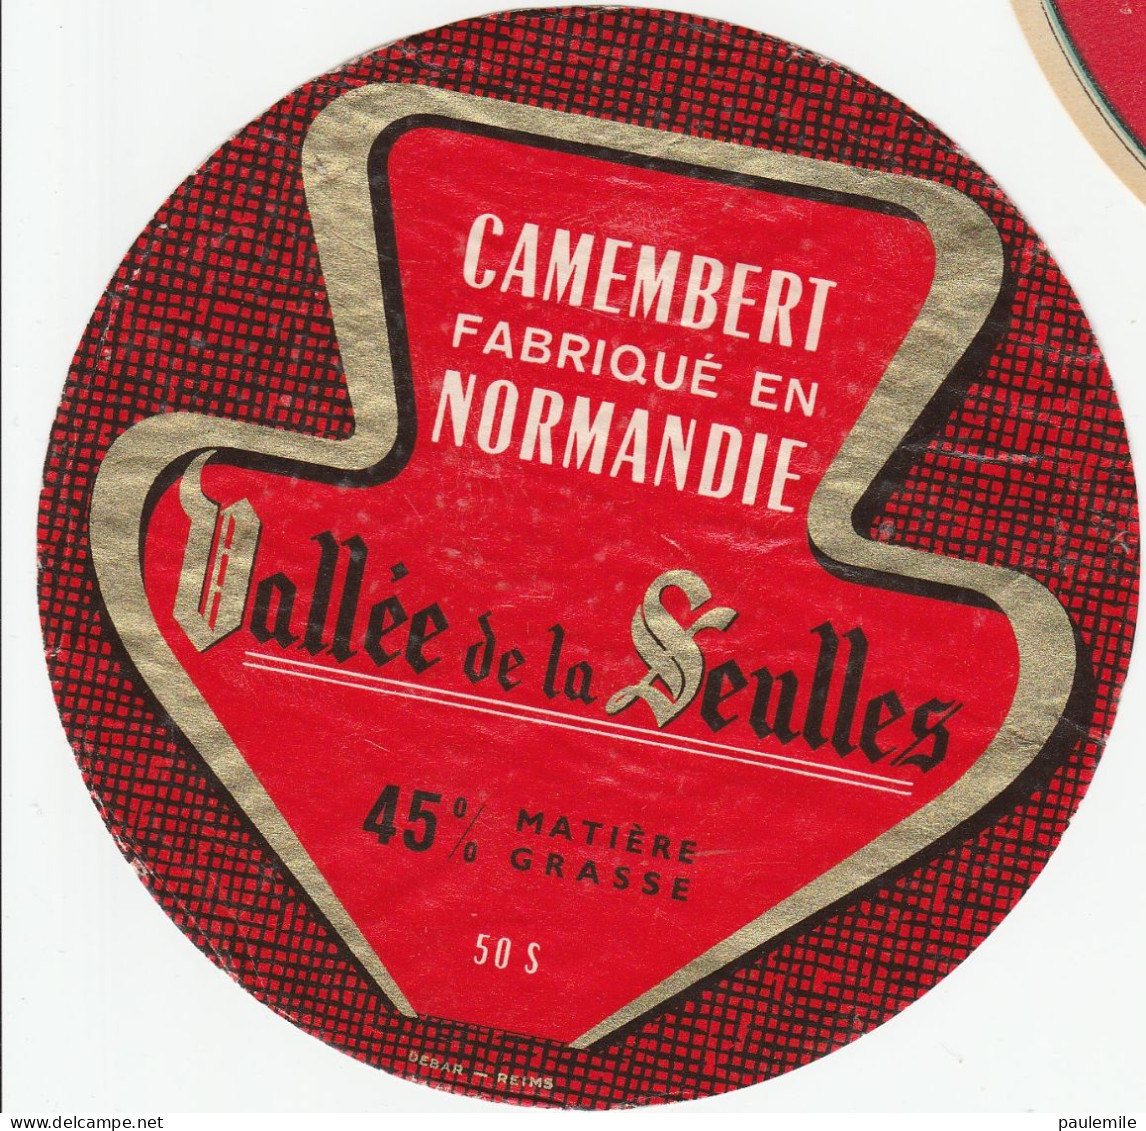 1 ETIQUETTE  CAMEMBERT DECOLLEE  VALLEE DE LA SEULLES 50 S - Fromage